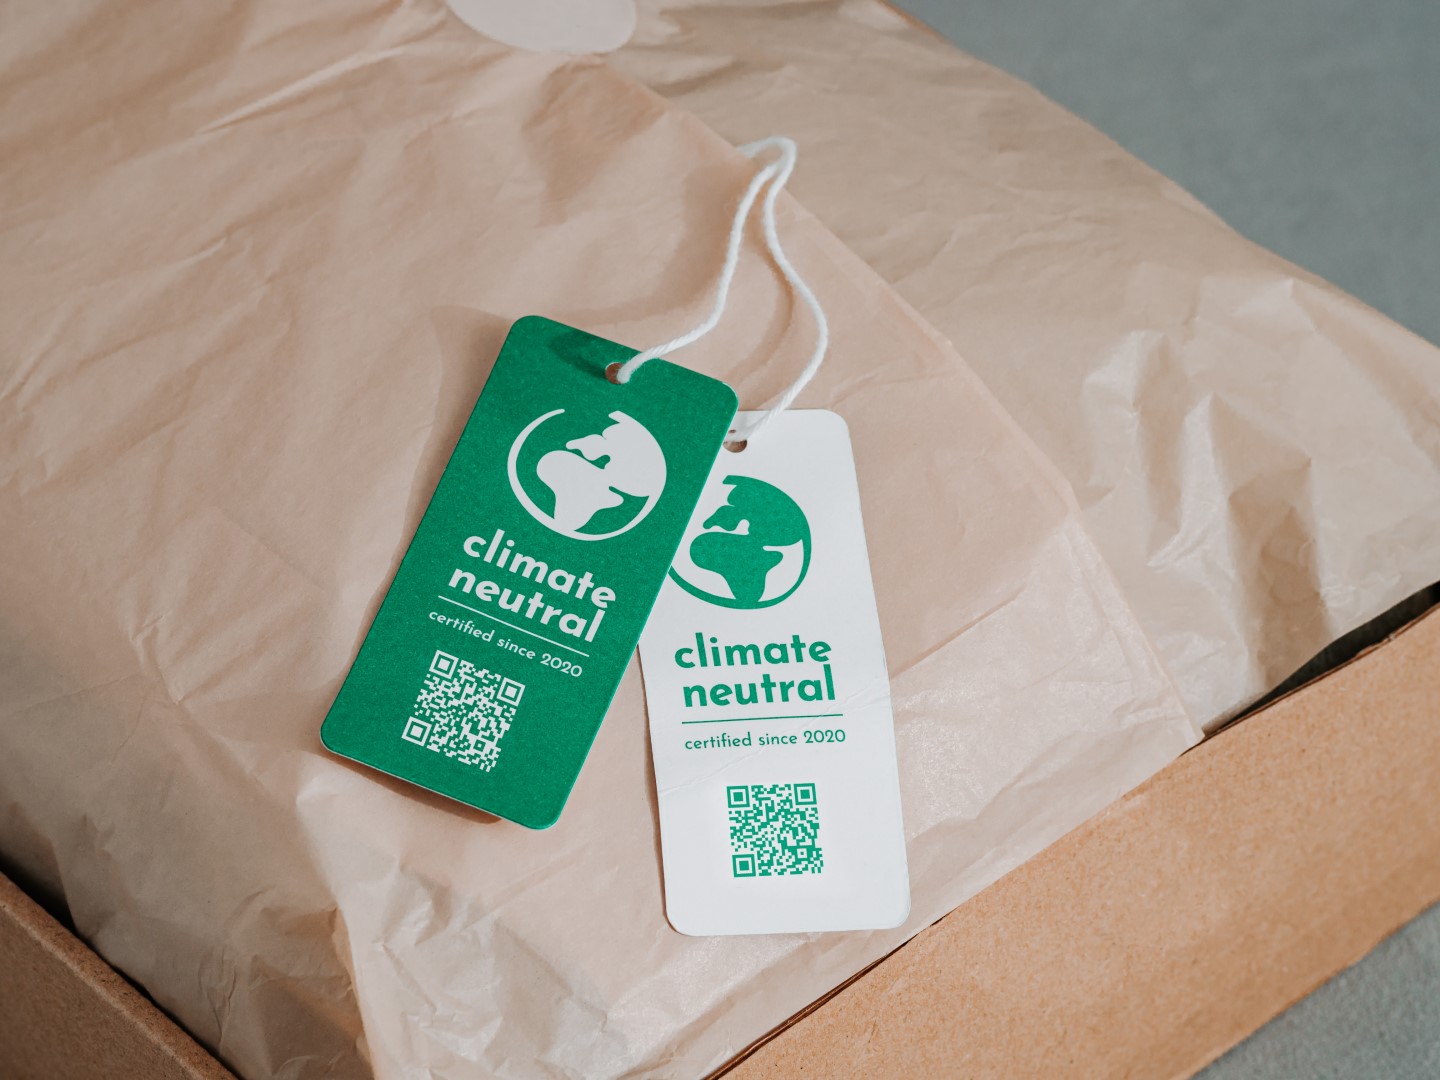 climate neutral and carbon label concept 2021 12 28 06 11 53 utc Large